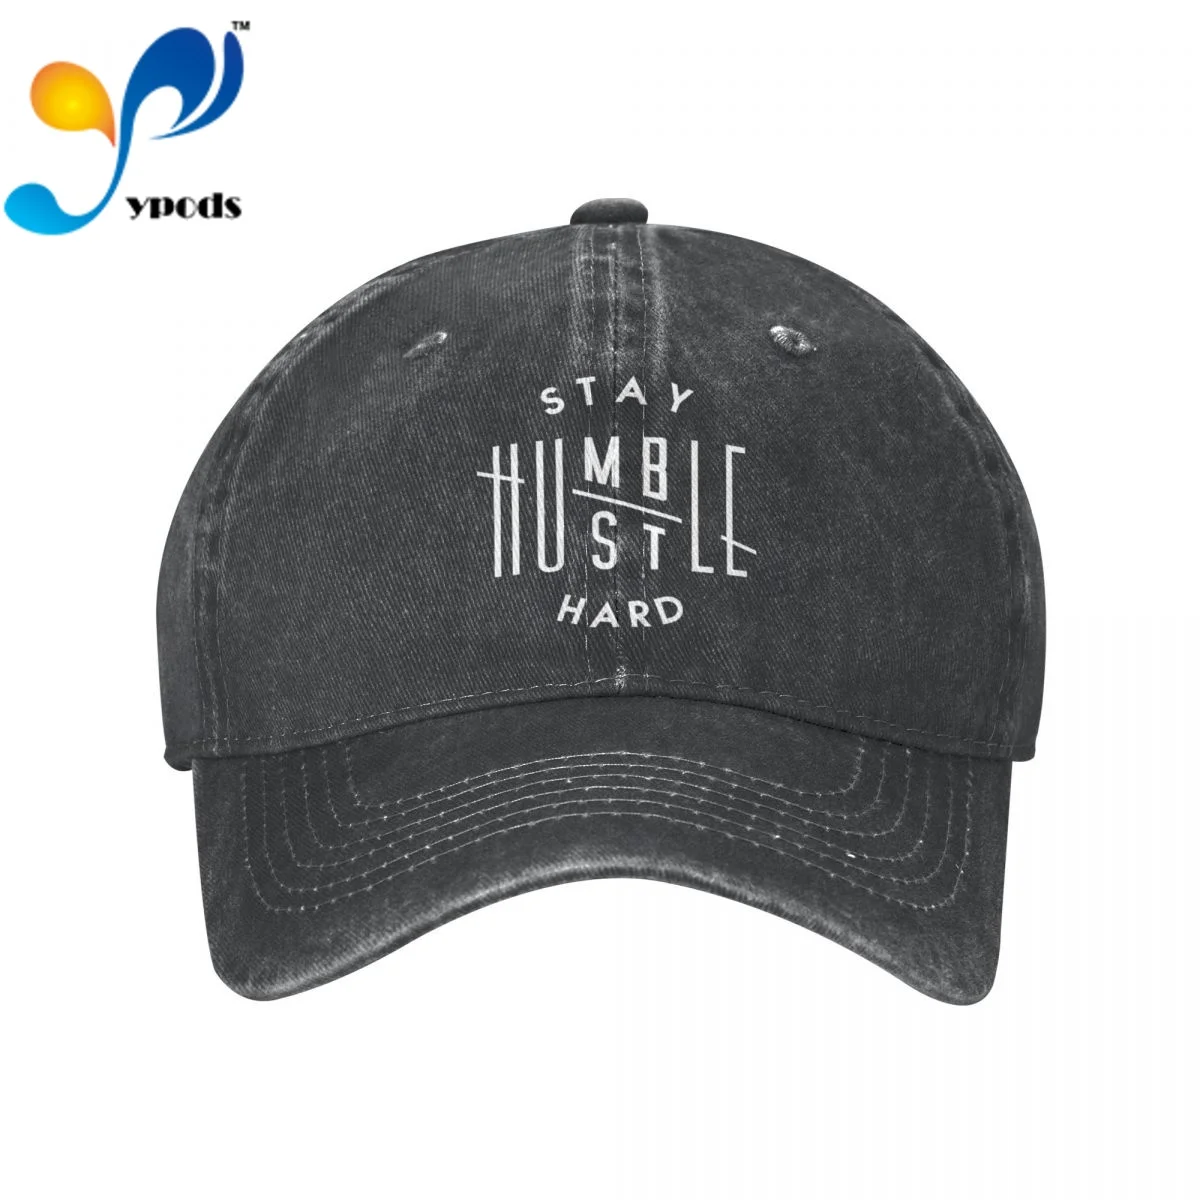 

Stay Humble Hustle Hard Cotton Cap For Men Women Gorras Snapback Caps Baseball Caps Casquette Dad Hat